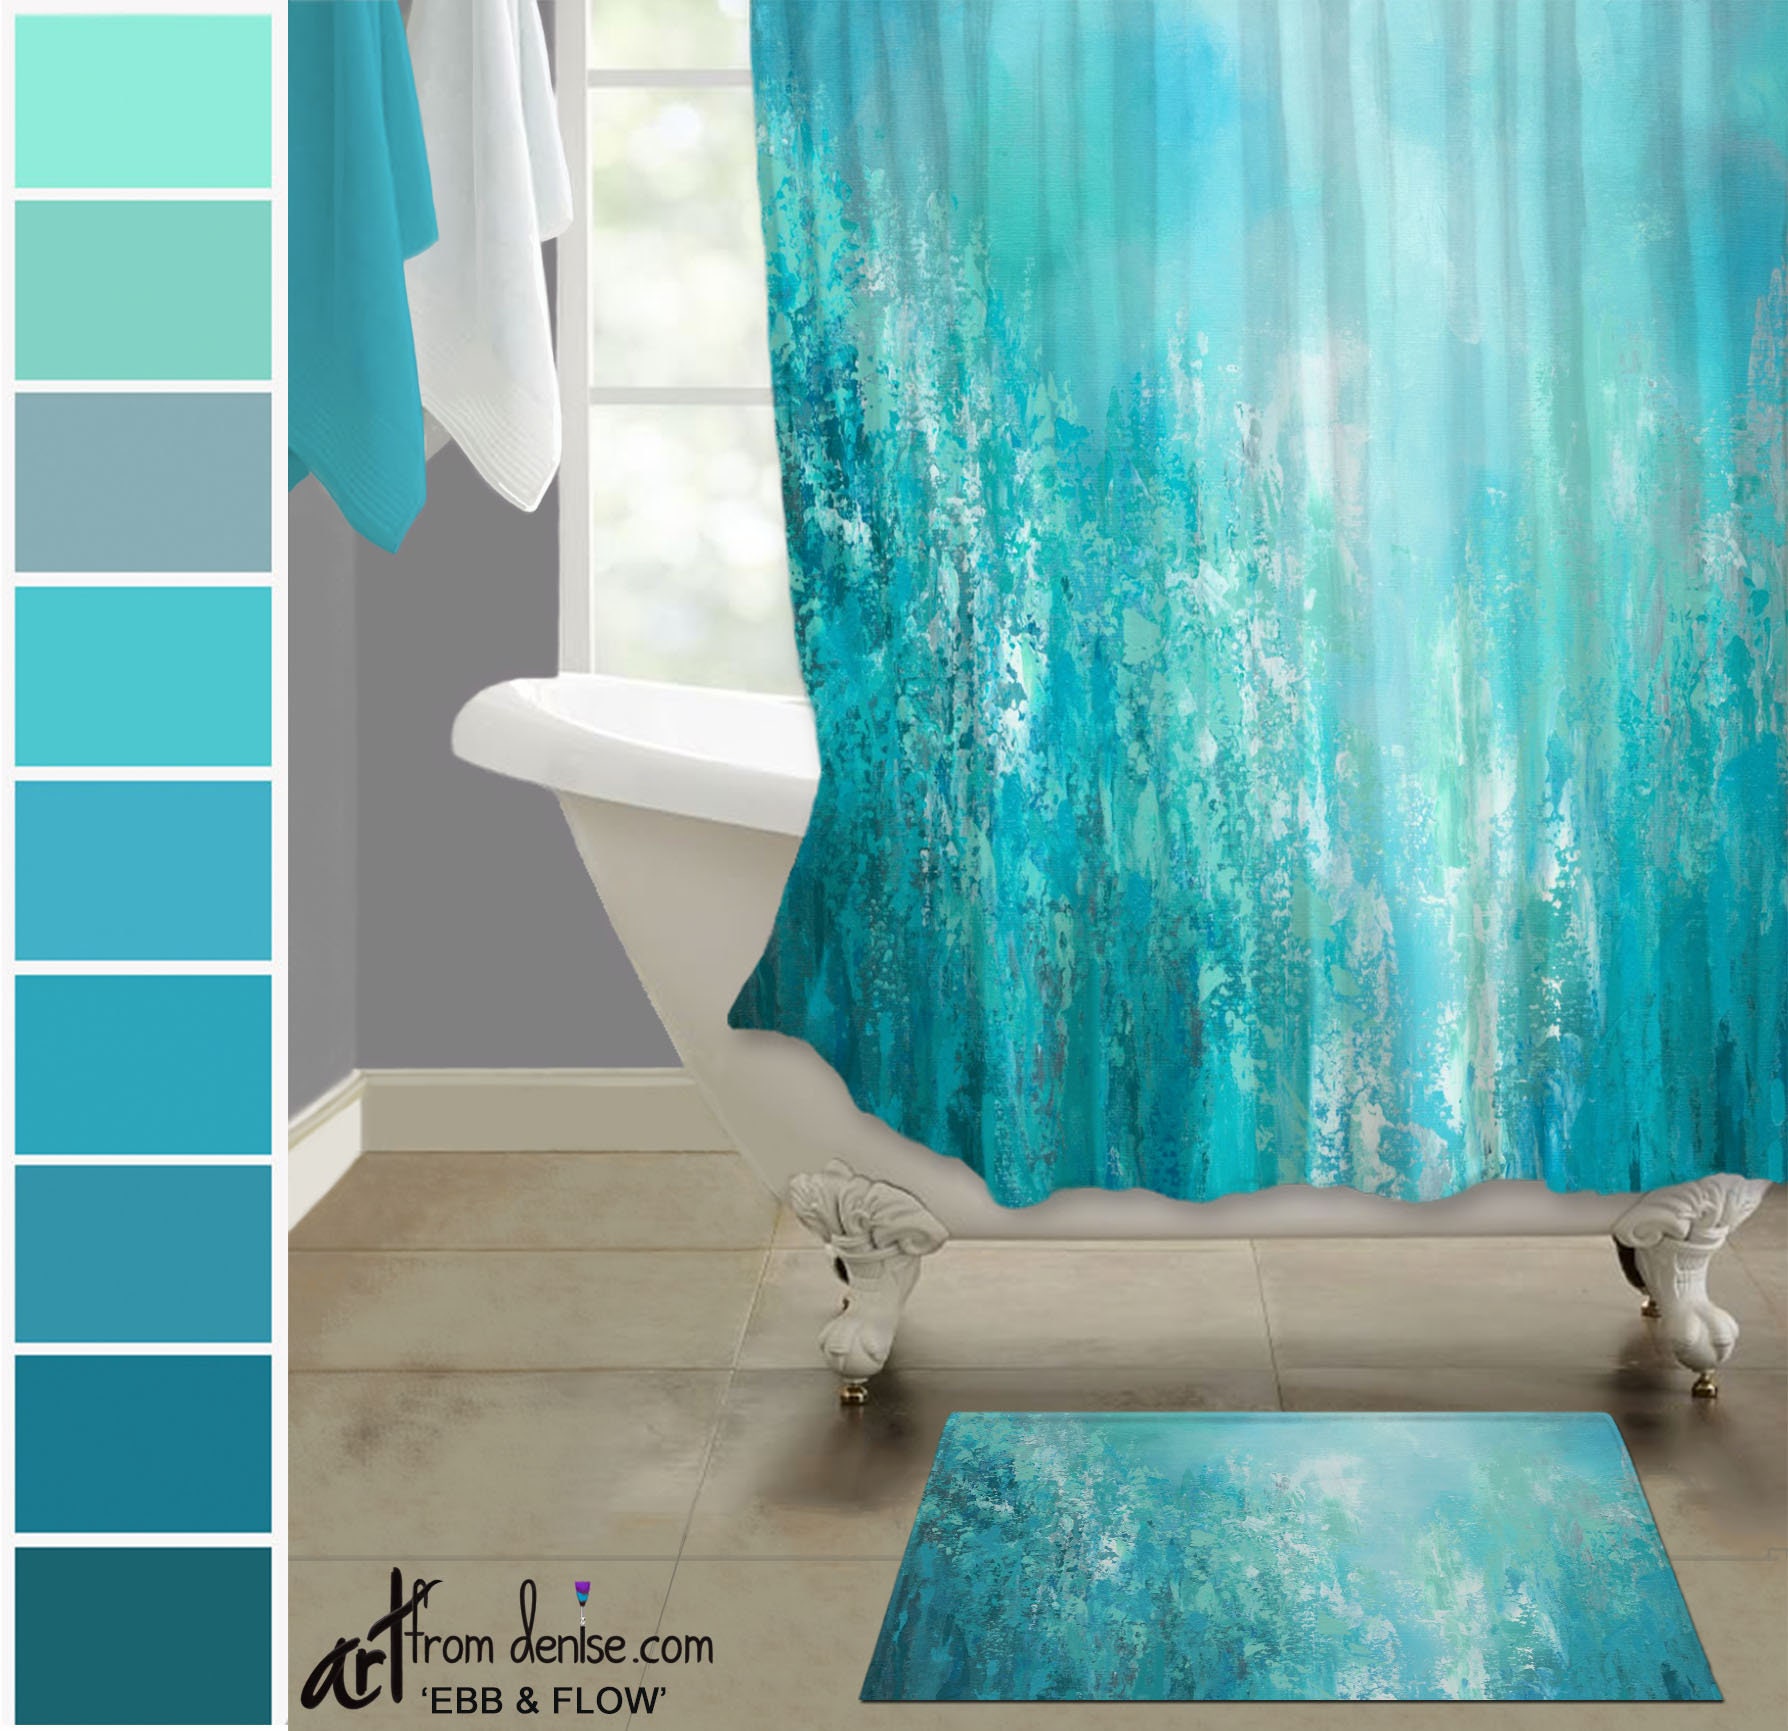 The Blue Wood Grain Waterproof Fabric Home Decor Shower Curtain Bathroom Mat 